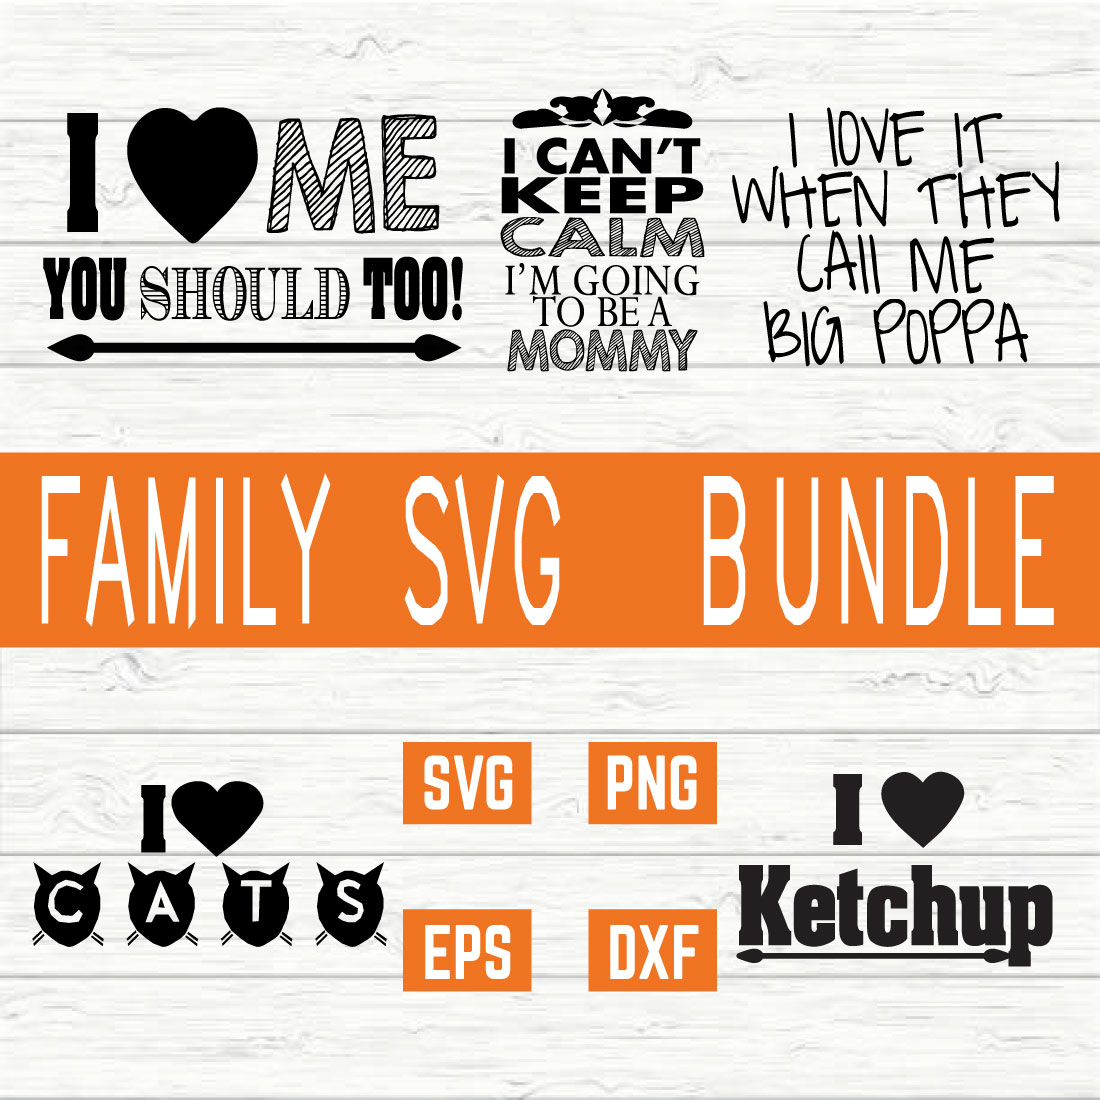 Family Svg Bundle vol 14 preview image.